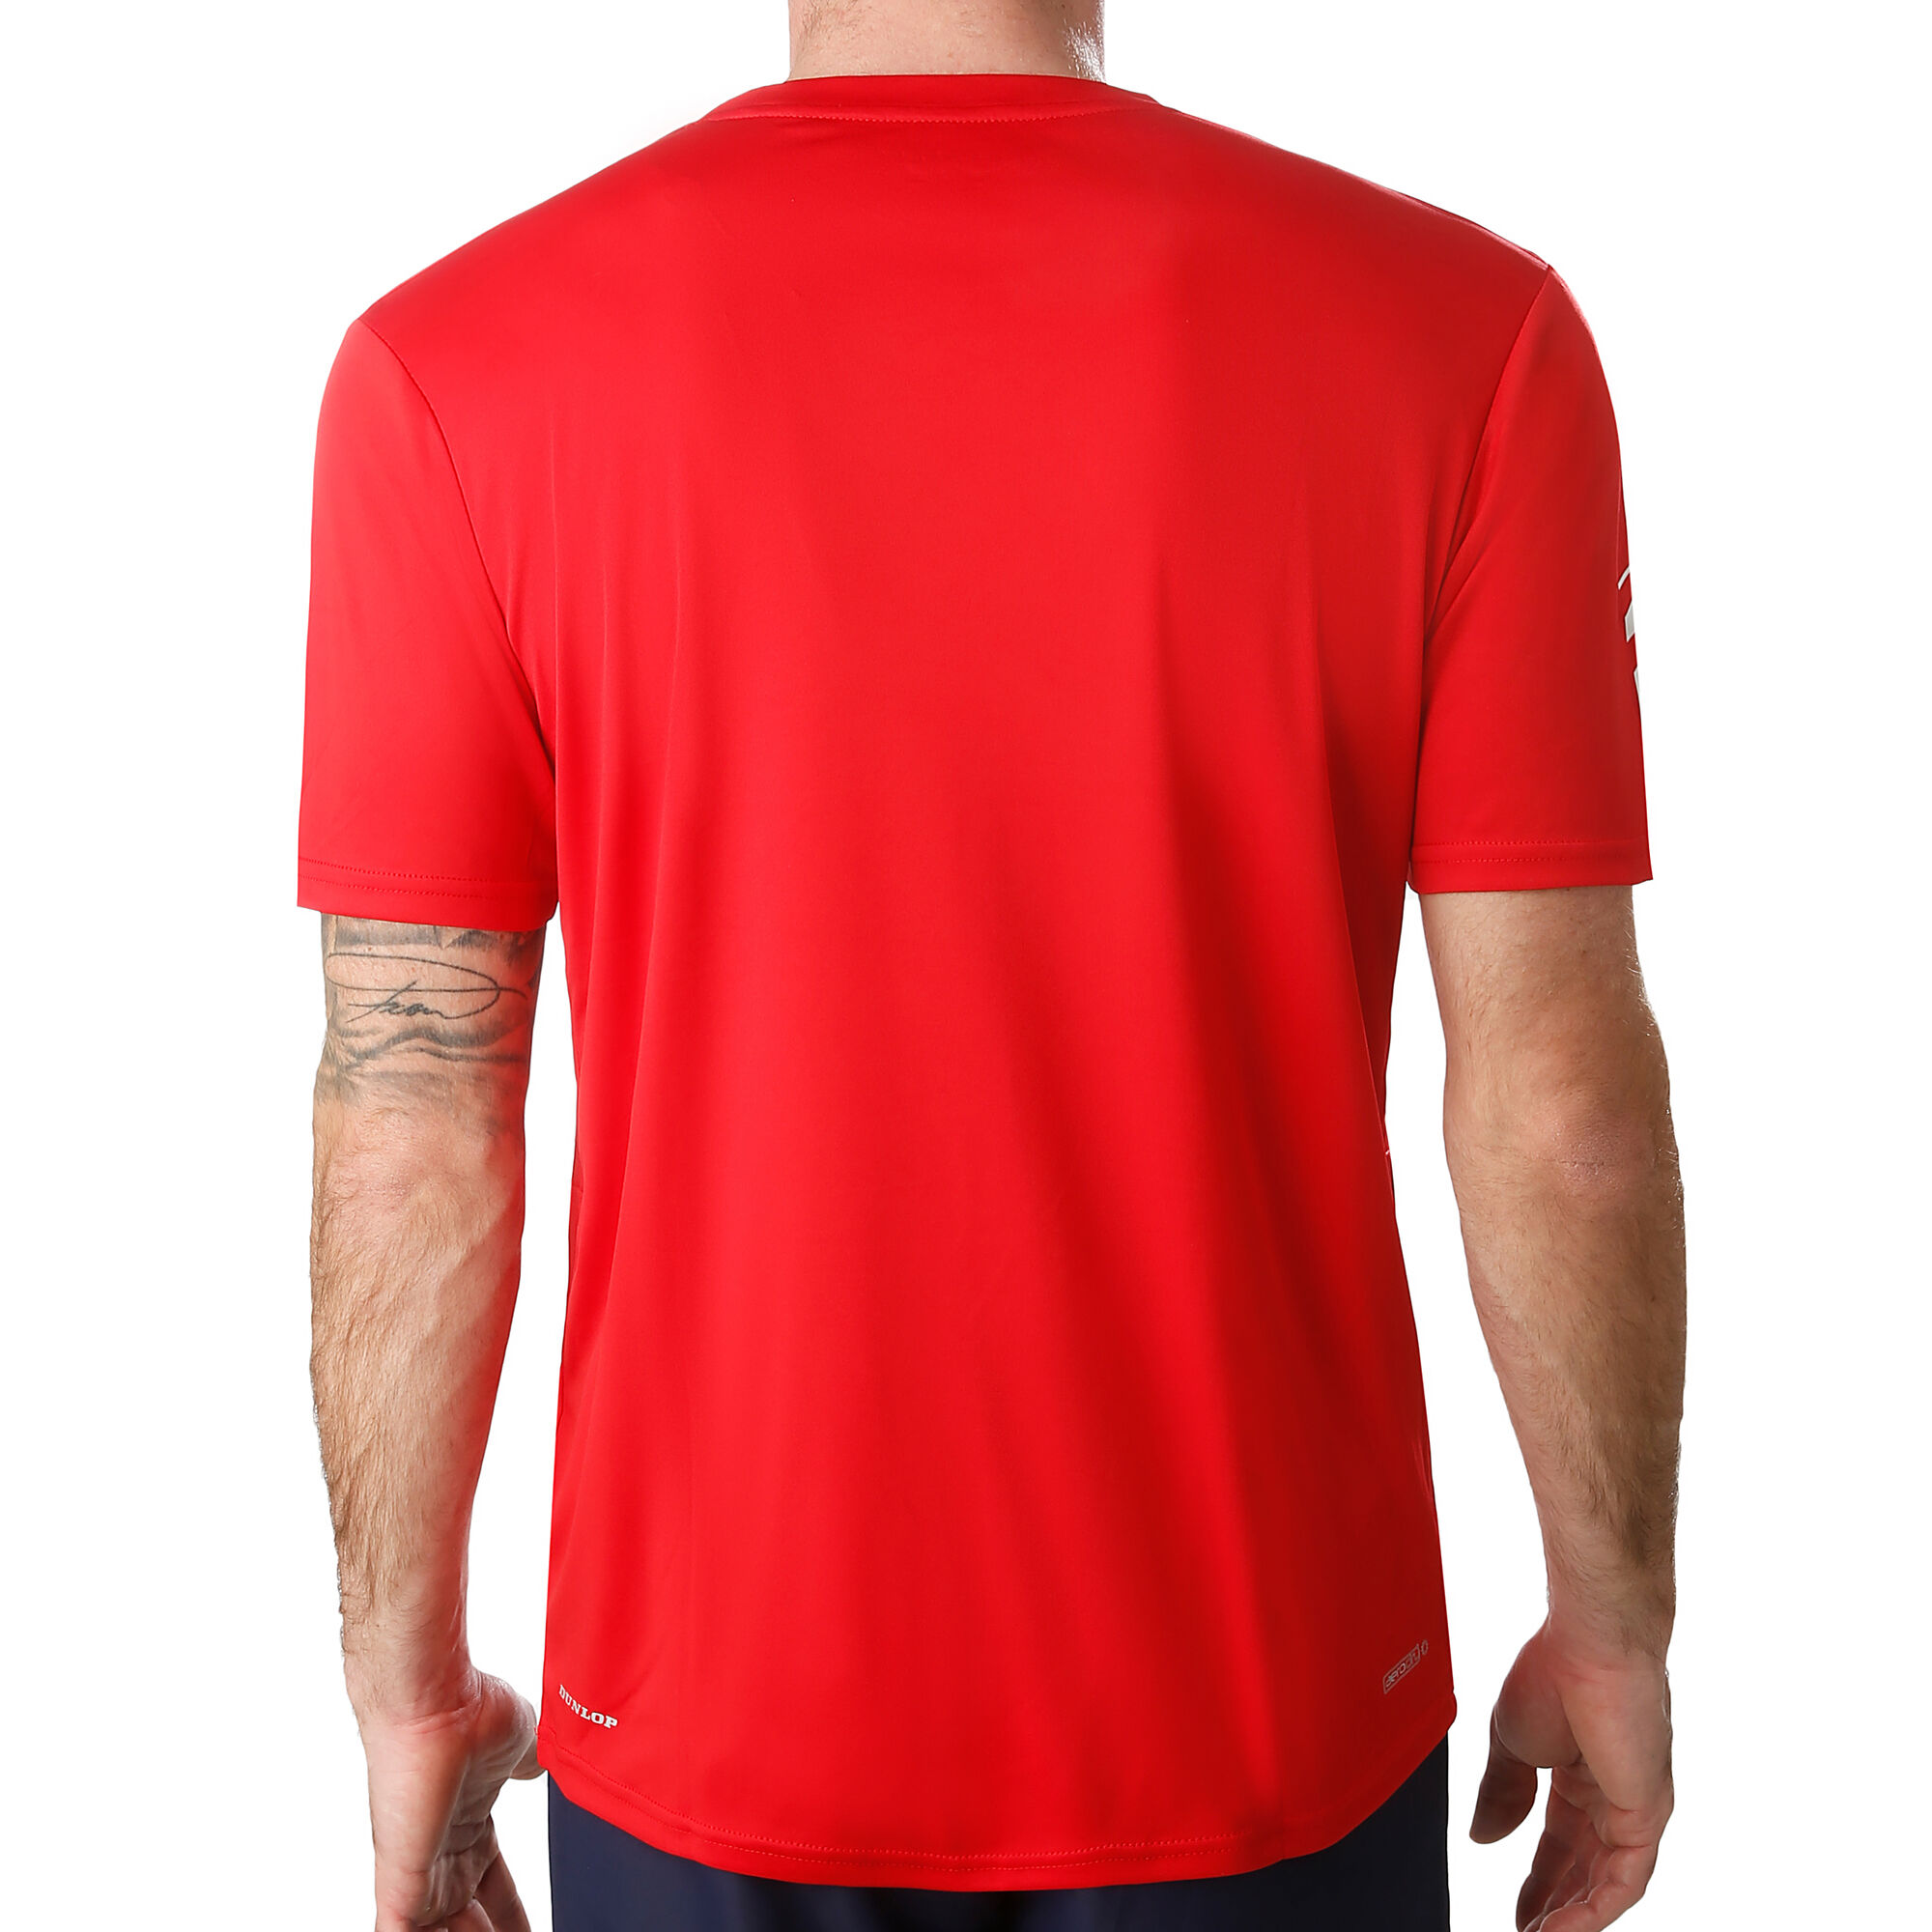 buy Dunlop Crew T-Shirt Men - Red, White online | Tennis-Point